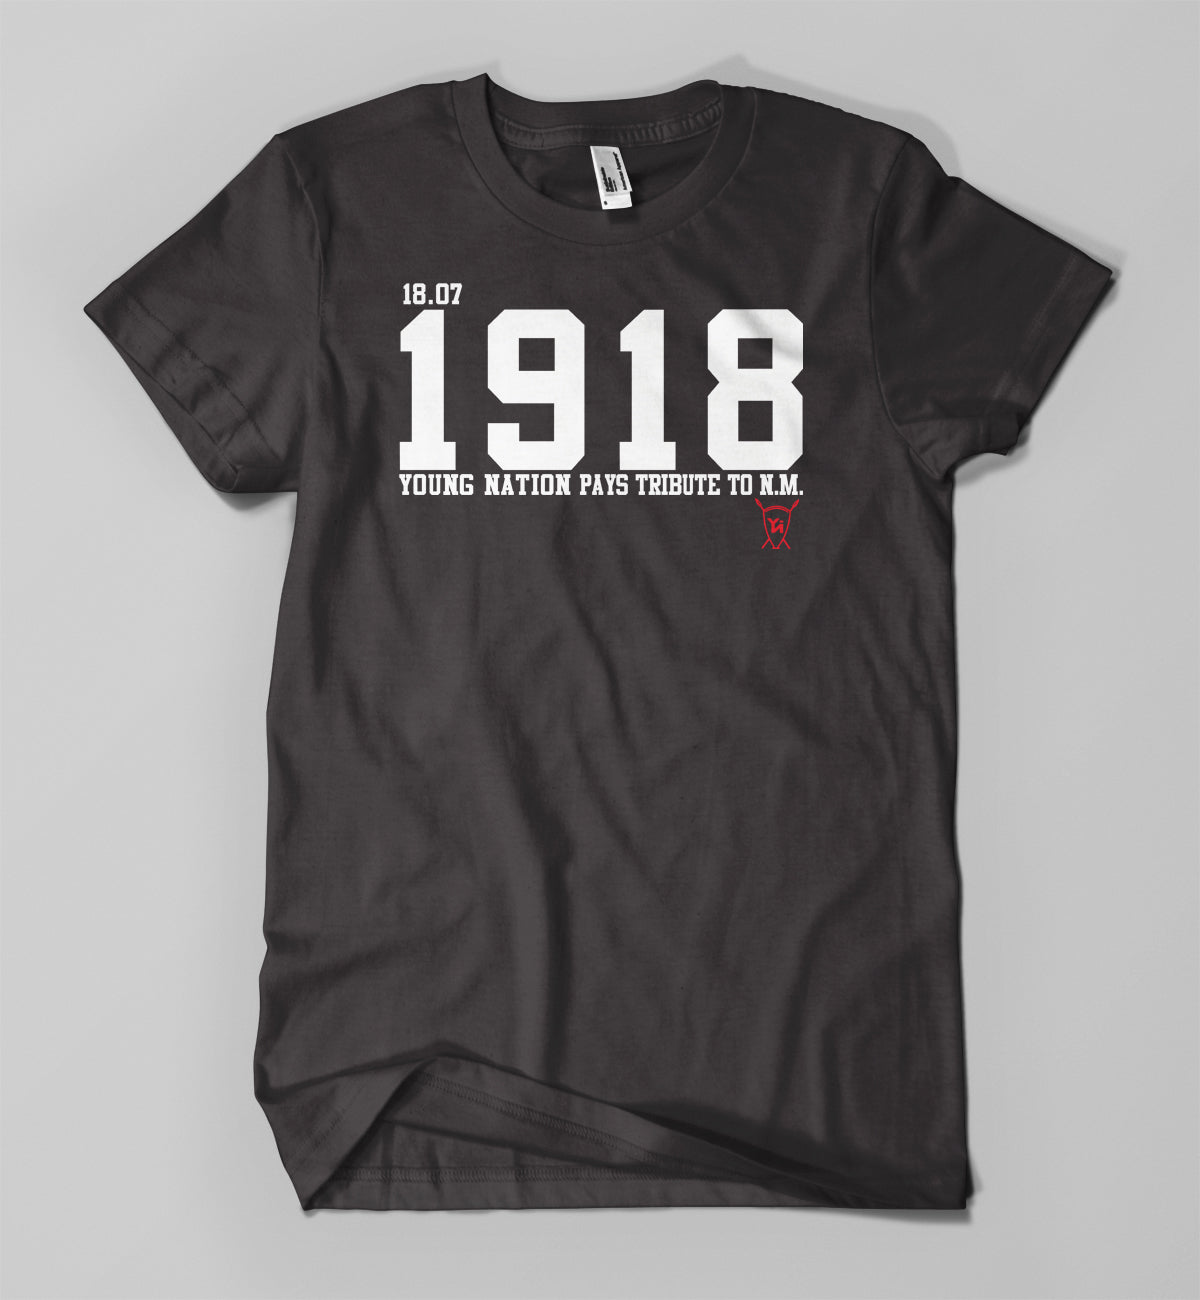 T-shirt TRIBUTE TO 1918 Nelson Mandela